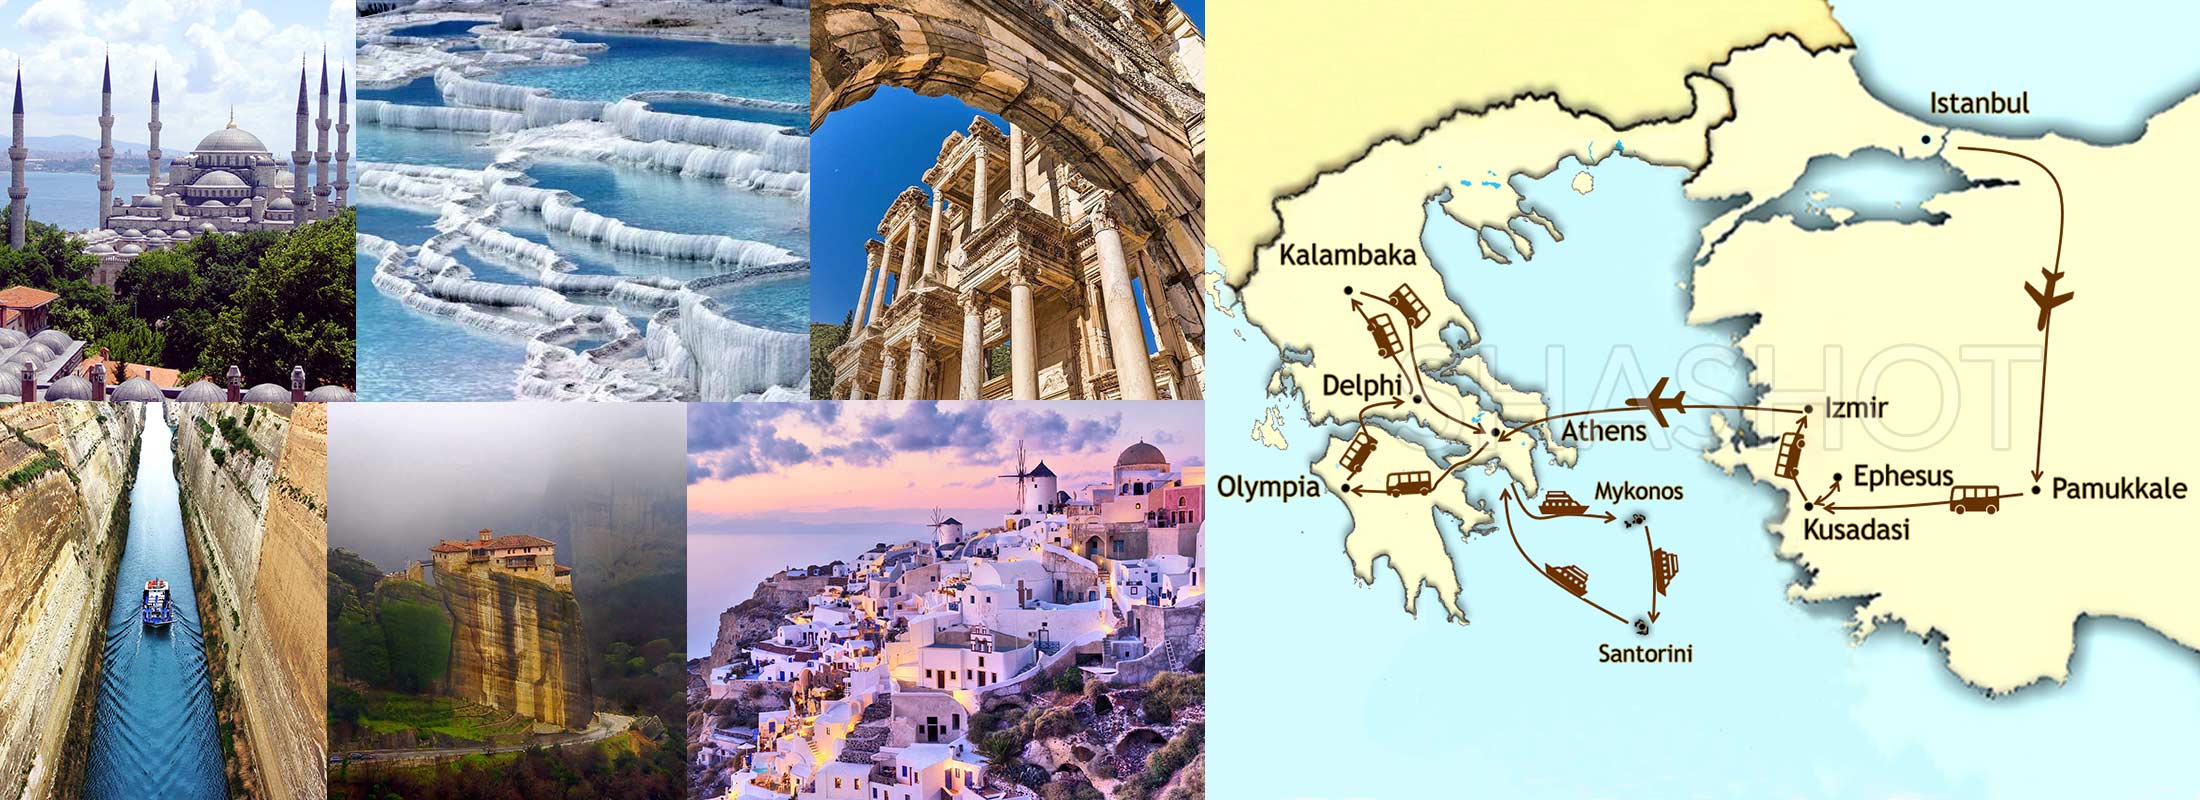 15 DAYS TURKEY GREECE PACKAGE TOUR ISTANBUL PAMUKKALE EPHESUS ATHENS EPIDAURUS MYCENAE OLYMPIA DELPHI METEORA MYKONOS SANTORINI